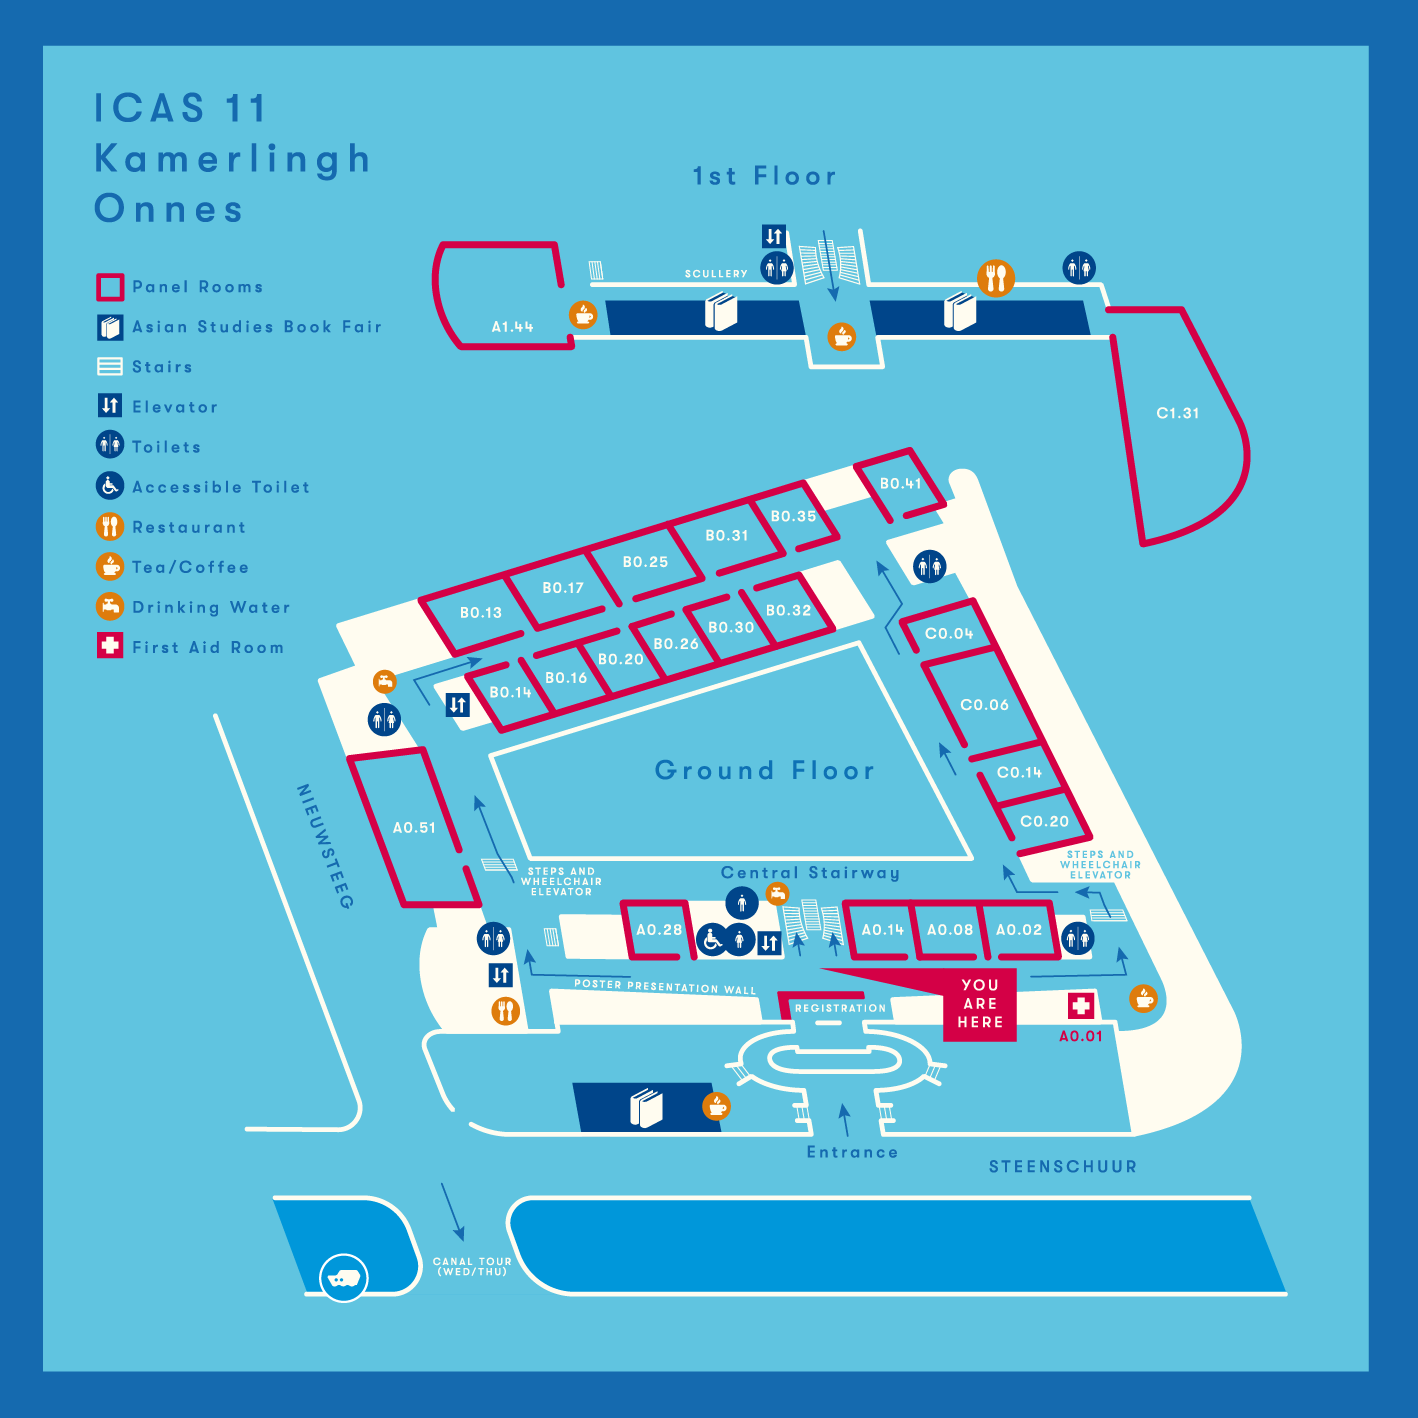 ICAS11 International Convention Leiden 2019